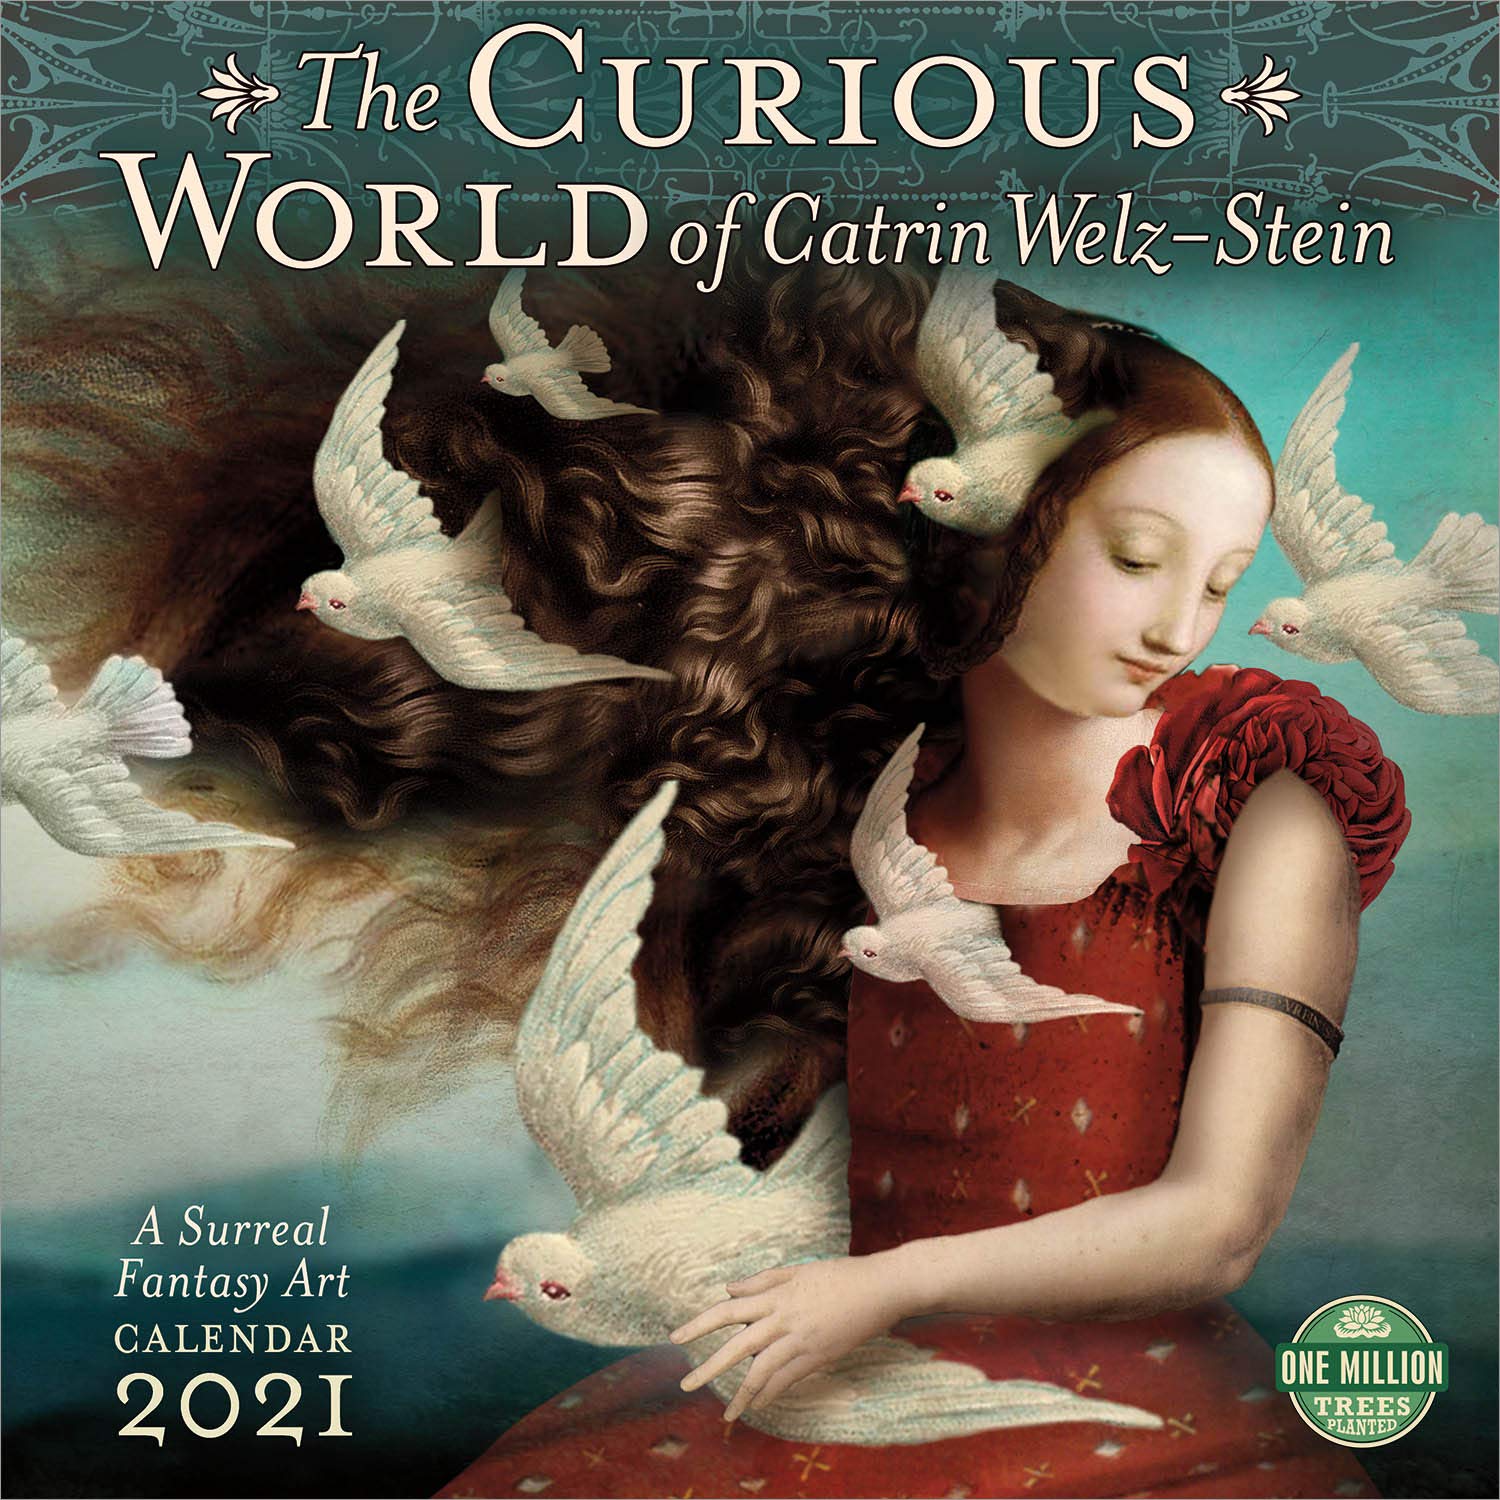 Calendar 2021 - The Curious World of Catrin Welz-Stein, 30x30 cm | Amber Lotus Publishing